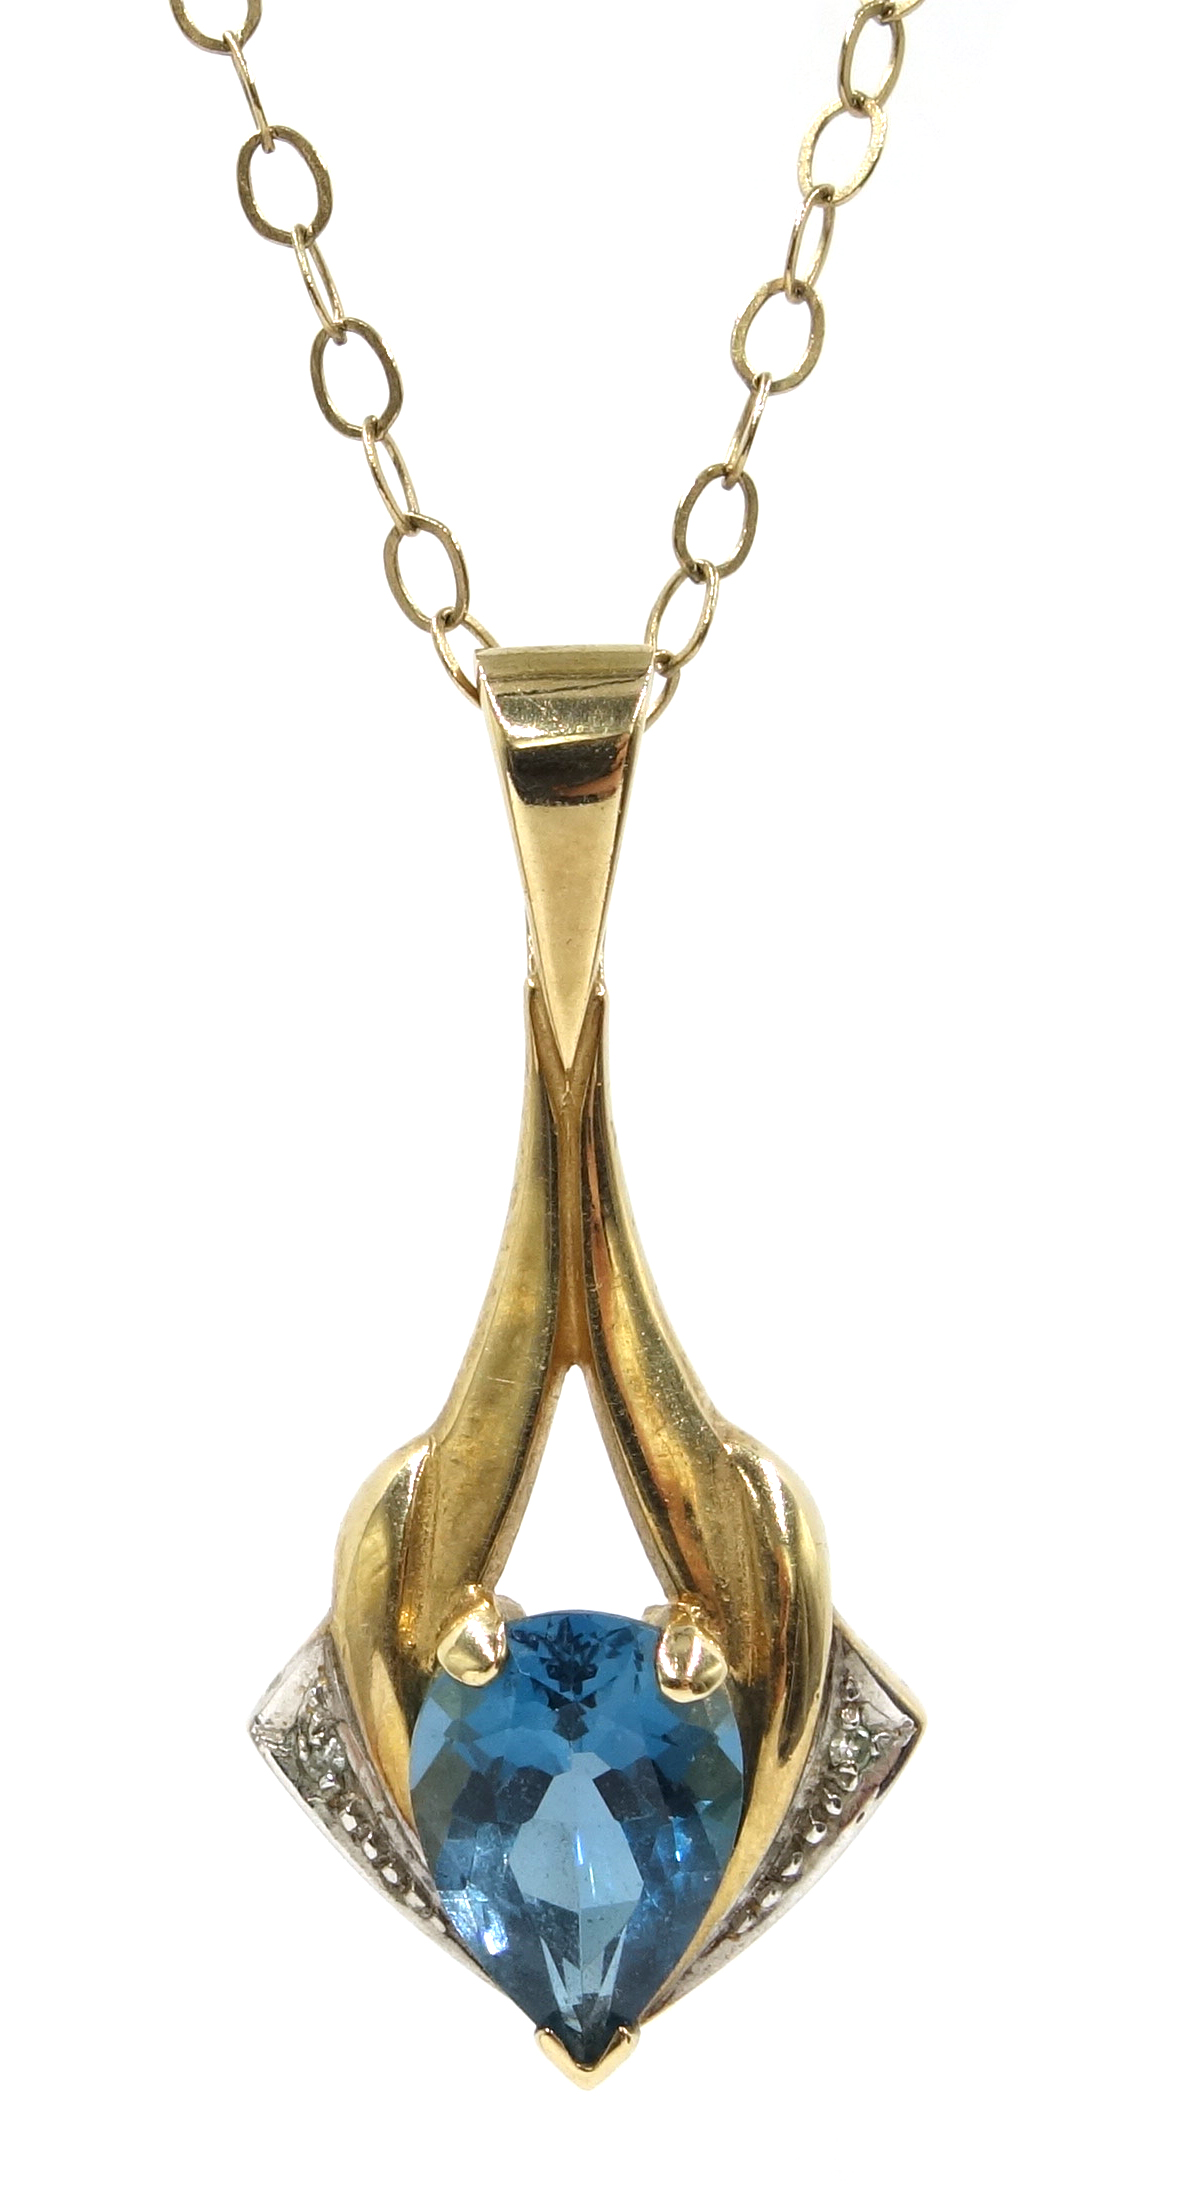 Gold blue topaz and diamond pendant necklace and oval blue topaz and diamond ring, - Image 2 of 4